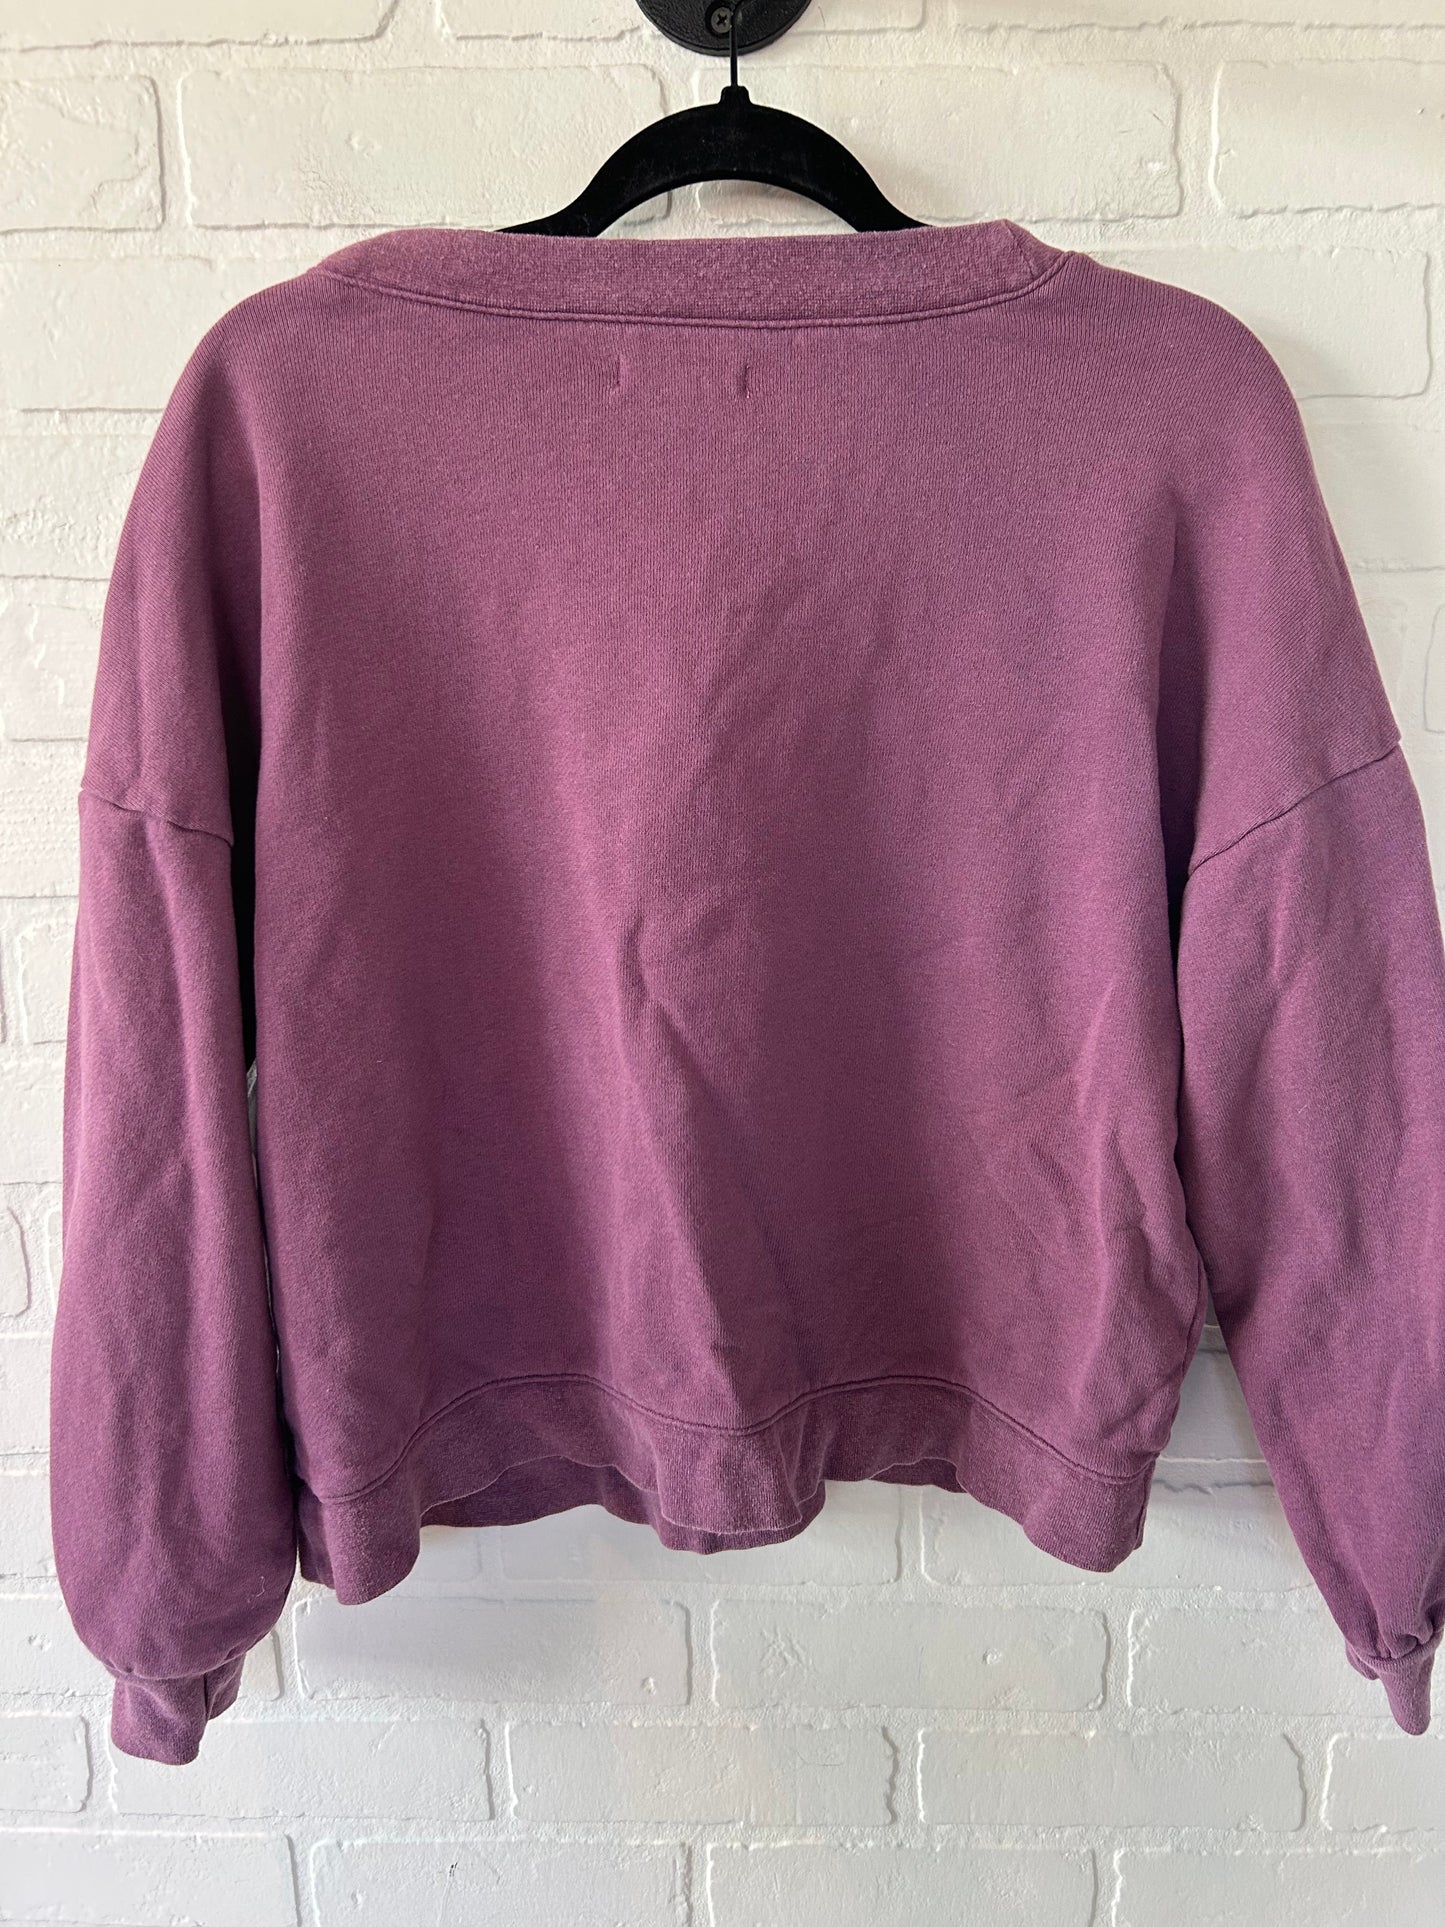 Sweatshirt Crewneck By Madewell  Size: S